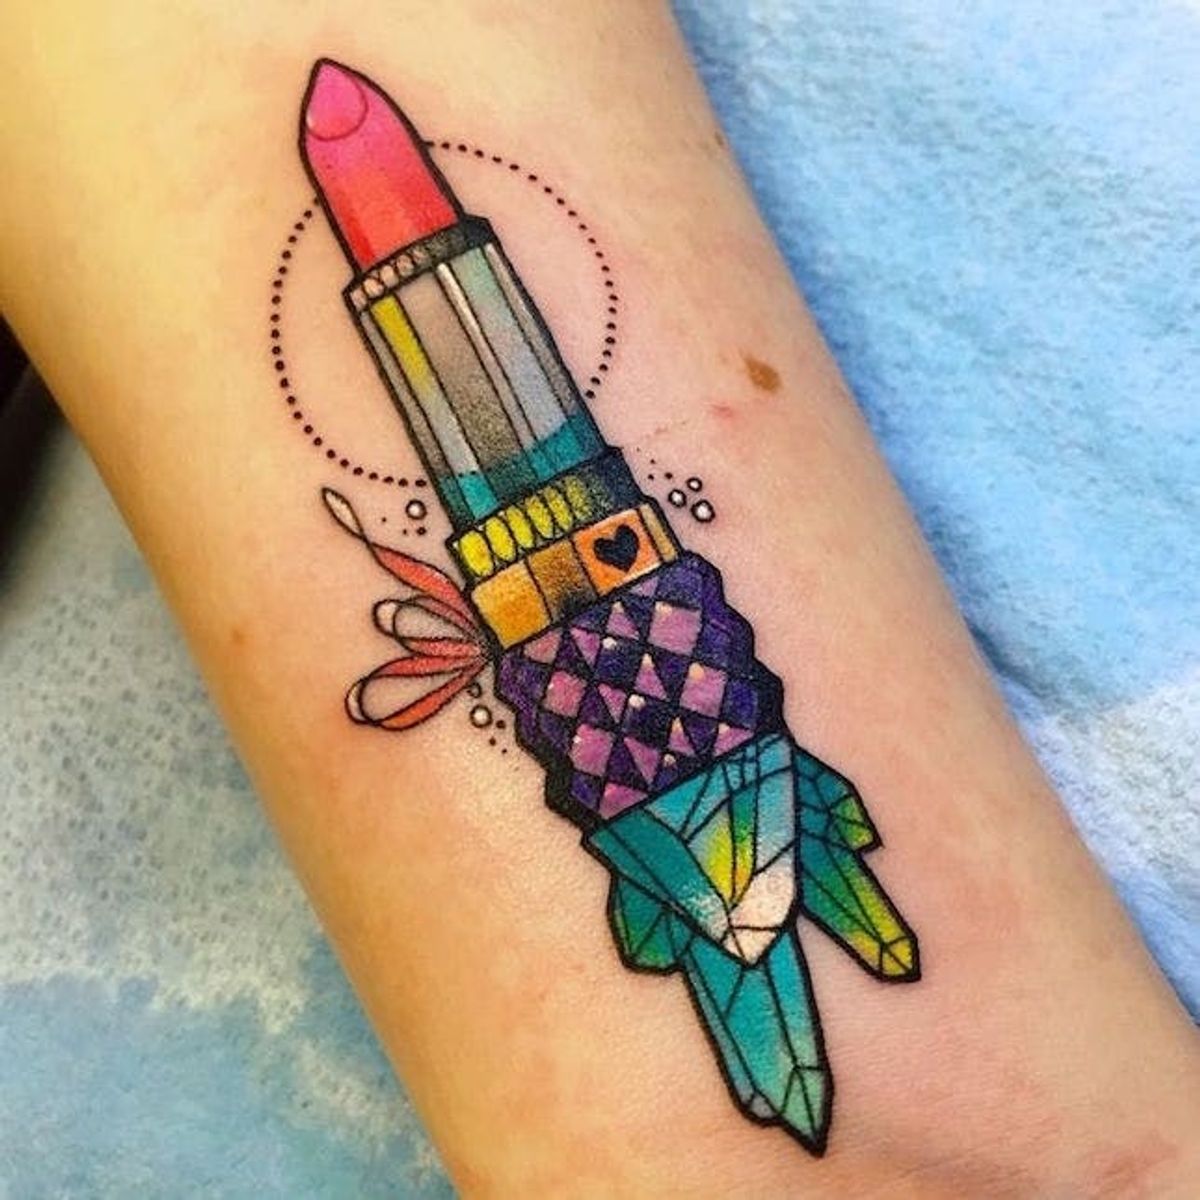 This Tattoo Artist’s Neon Designs Will Brighten Up Your Day